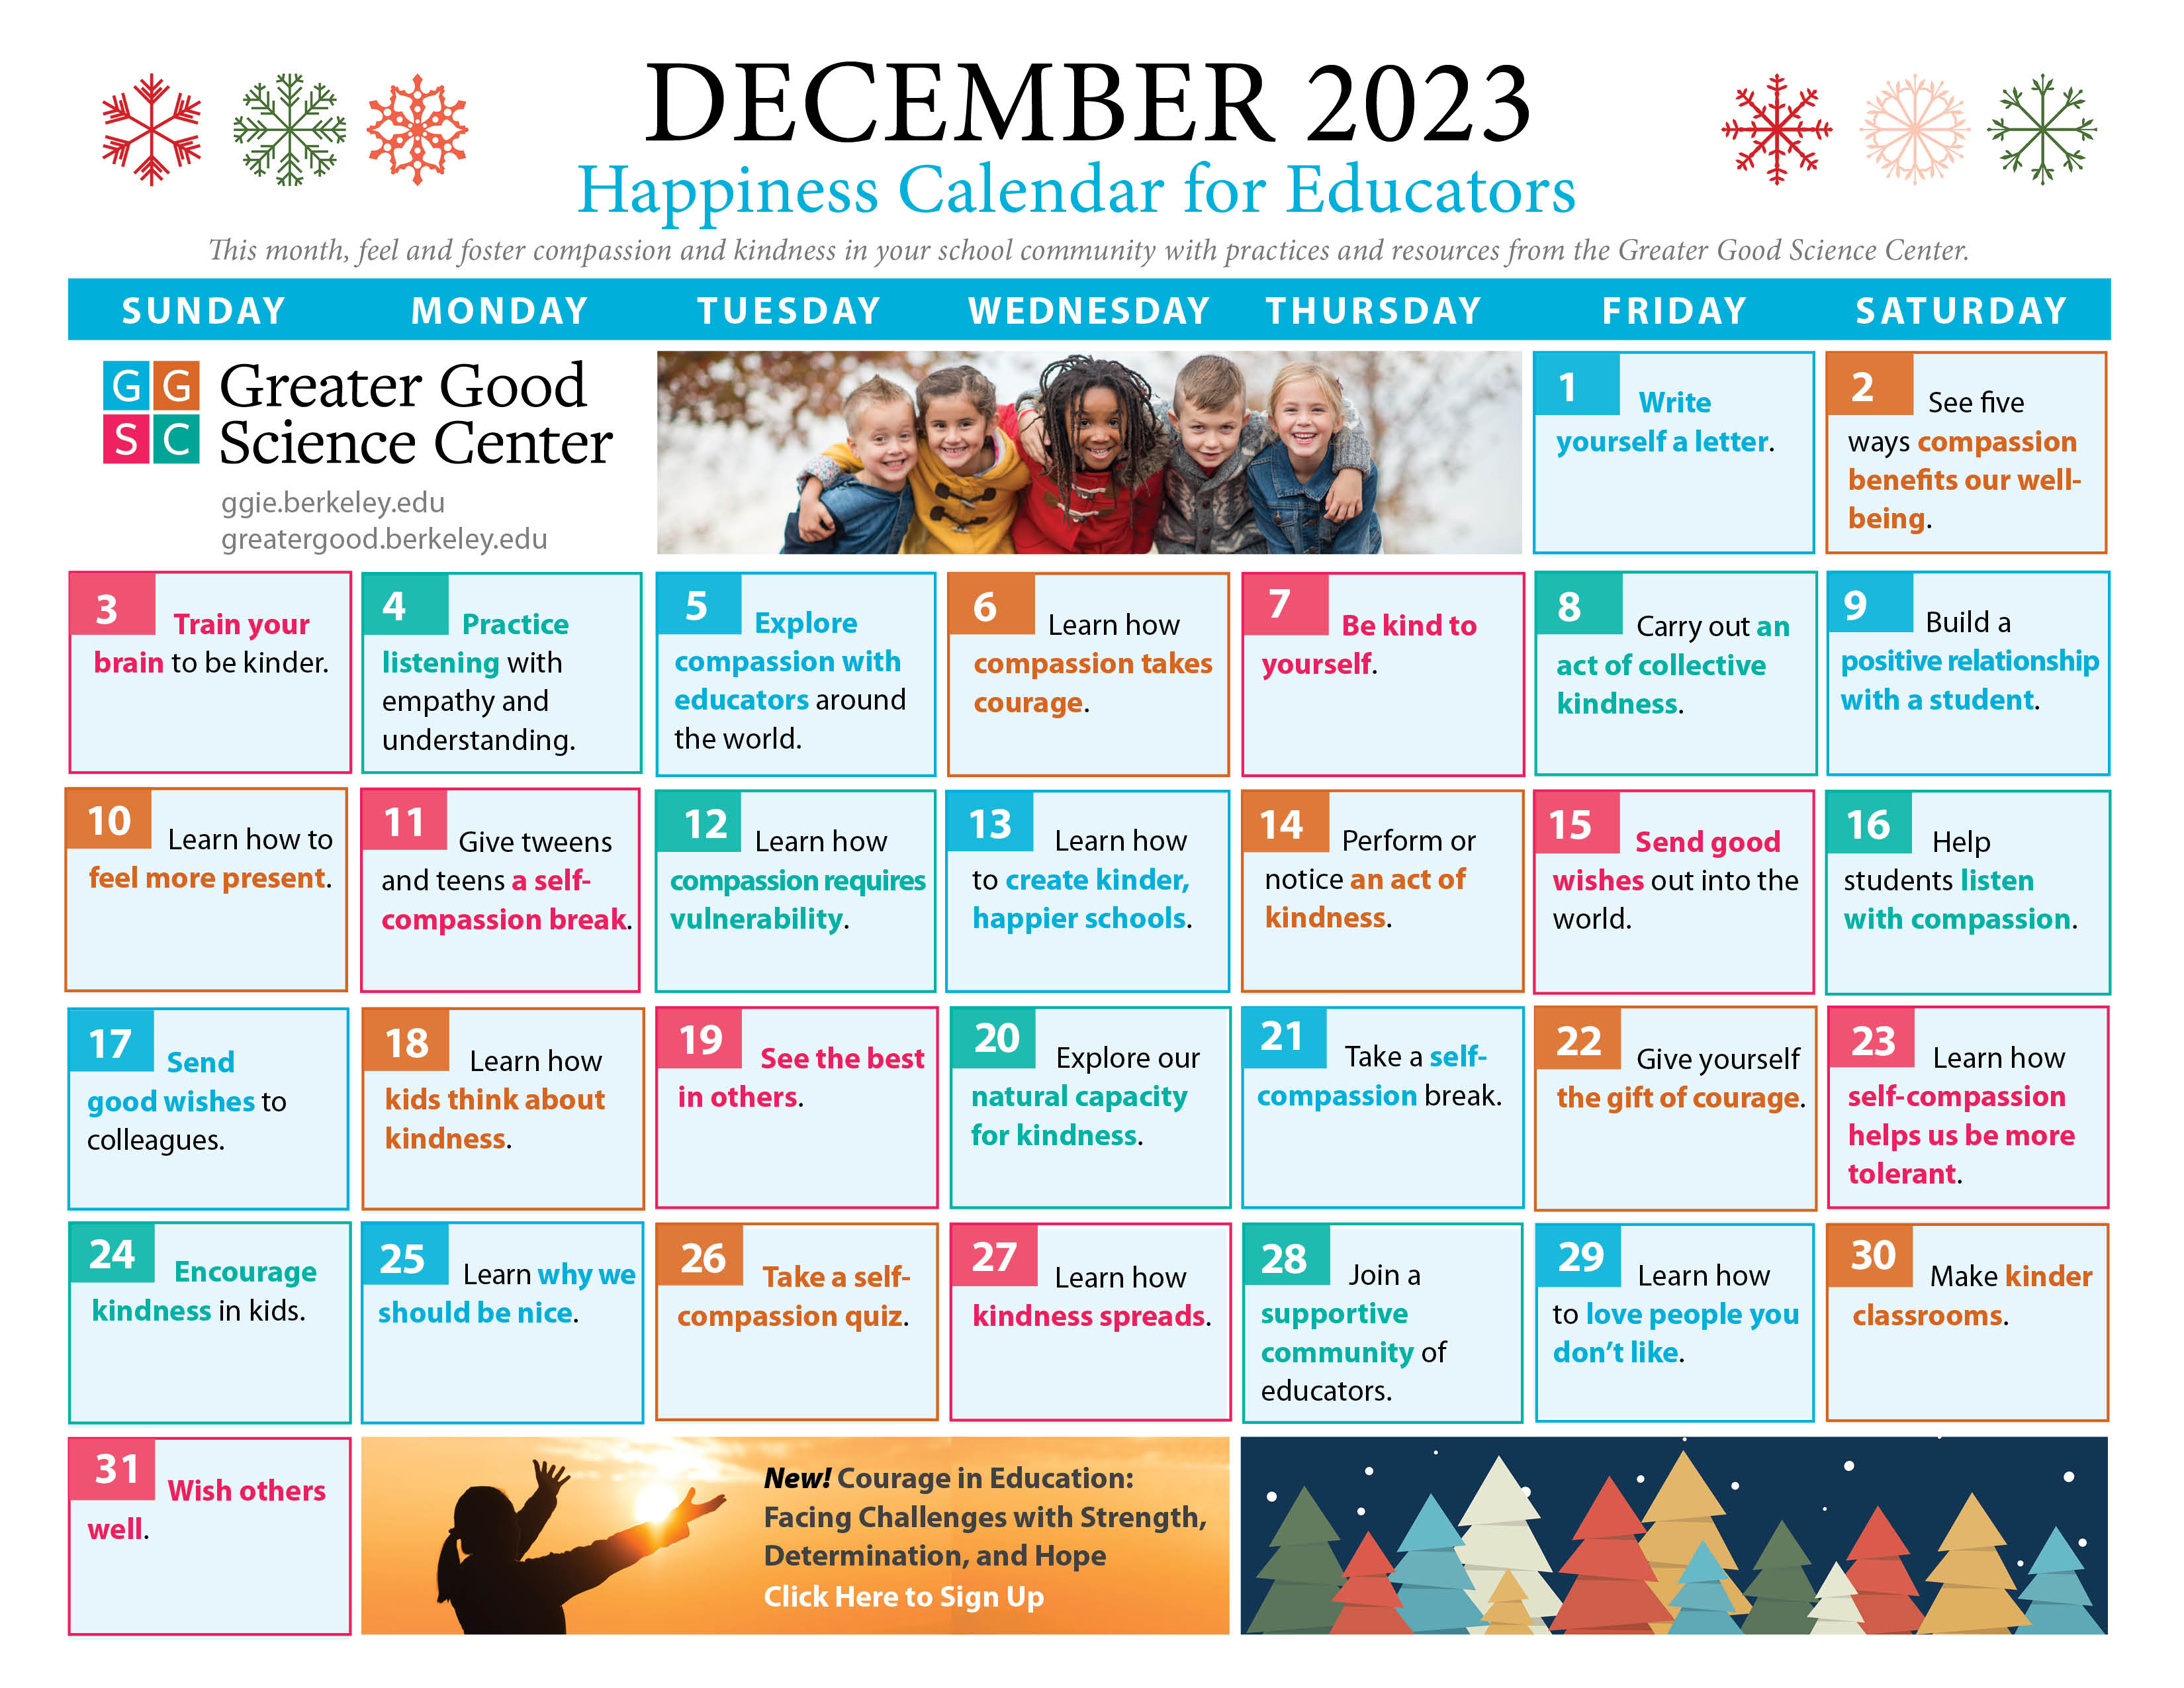 December 2023 happiness calendar for educators